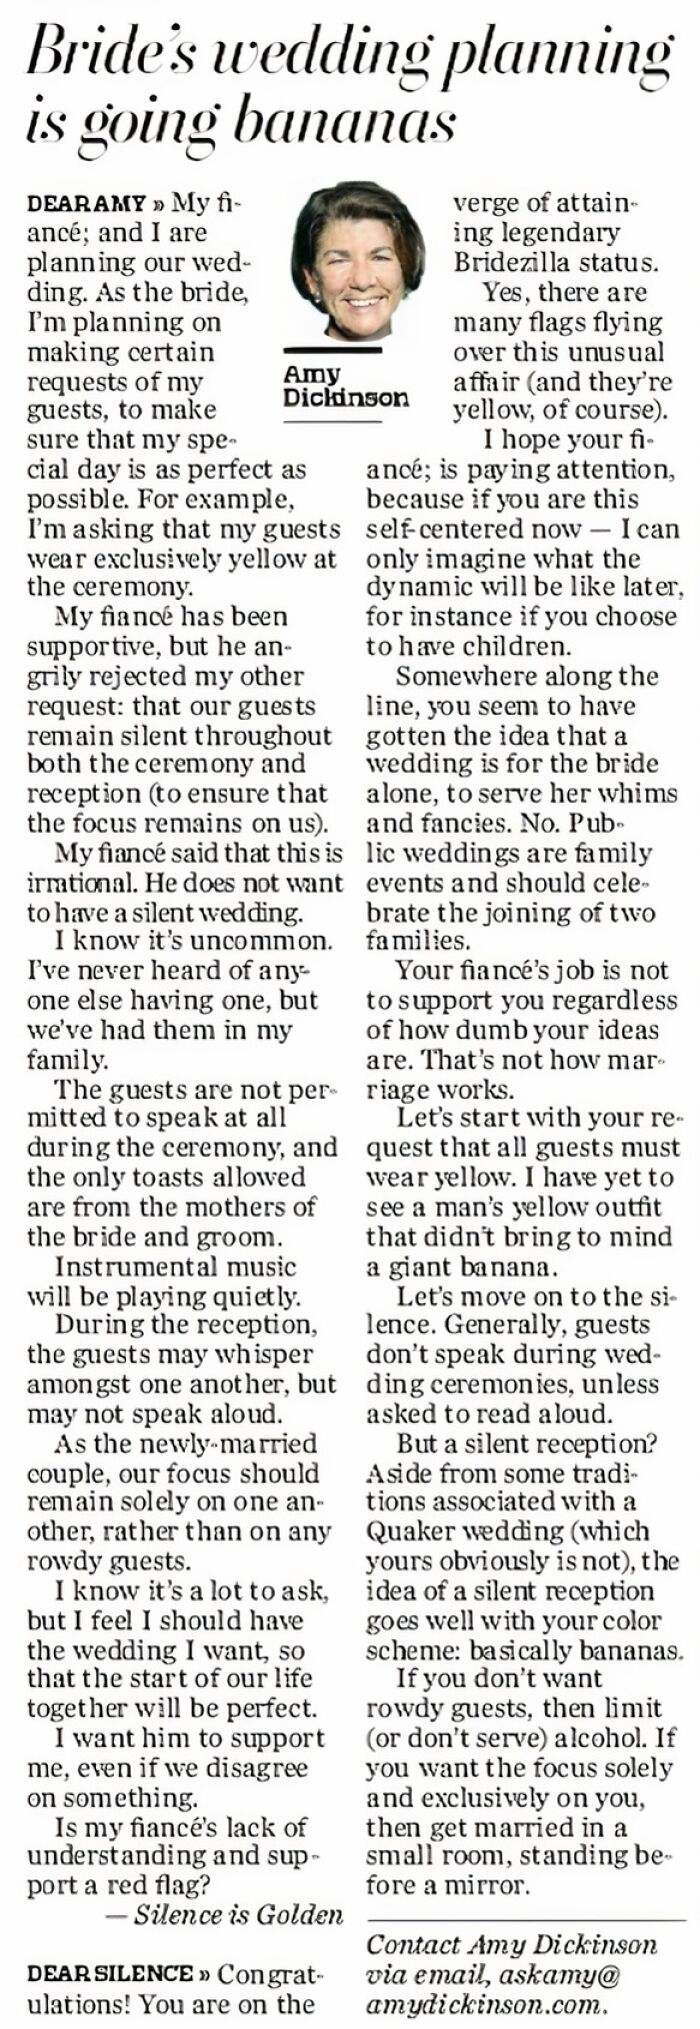 Guests Must Wear Yellow, May Not Speak Aloud